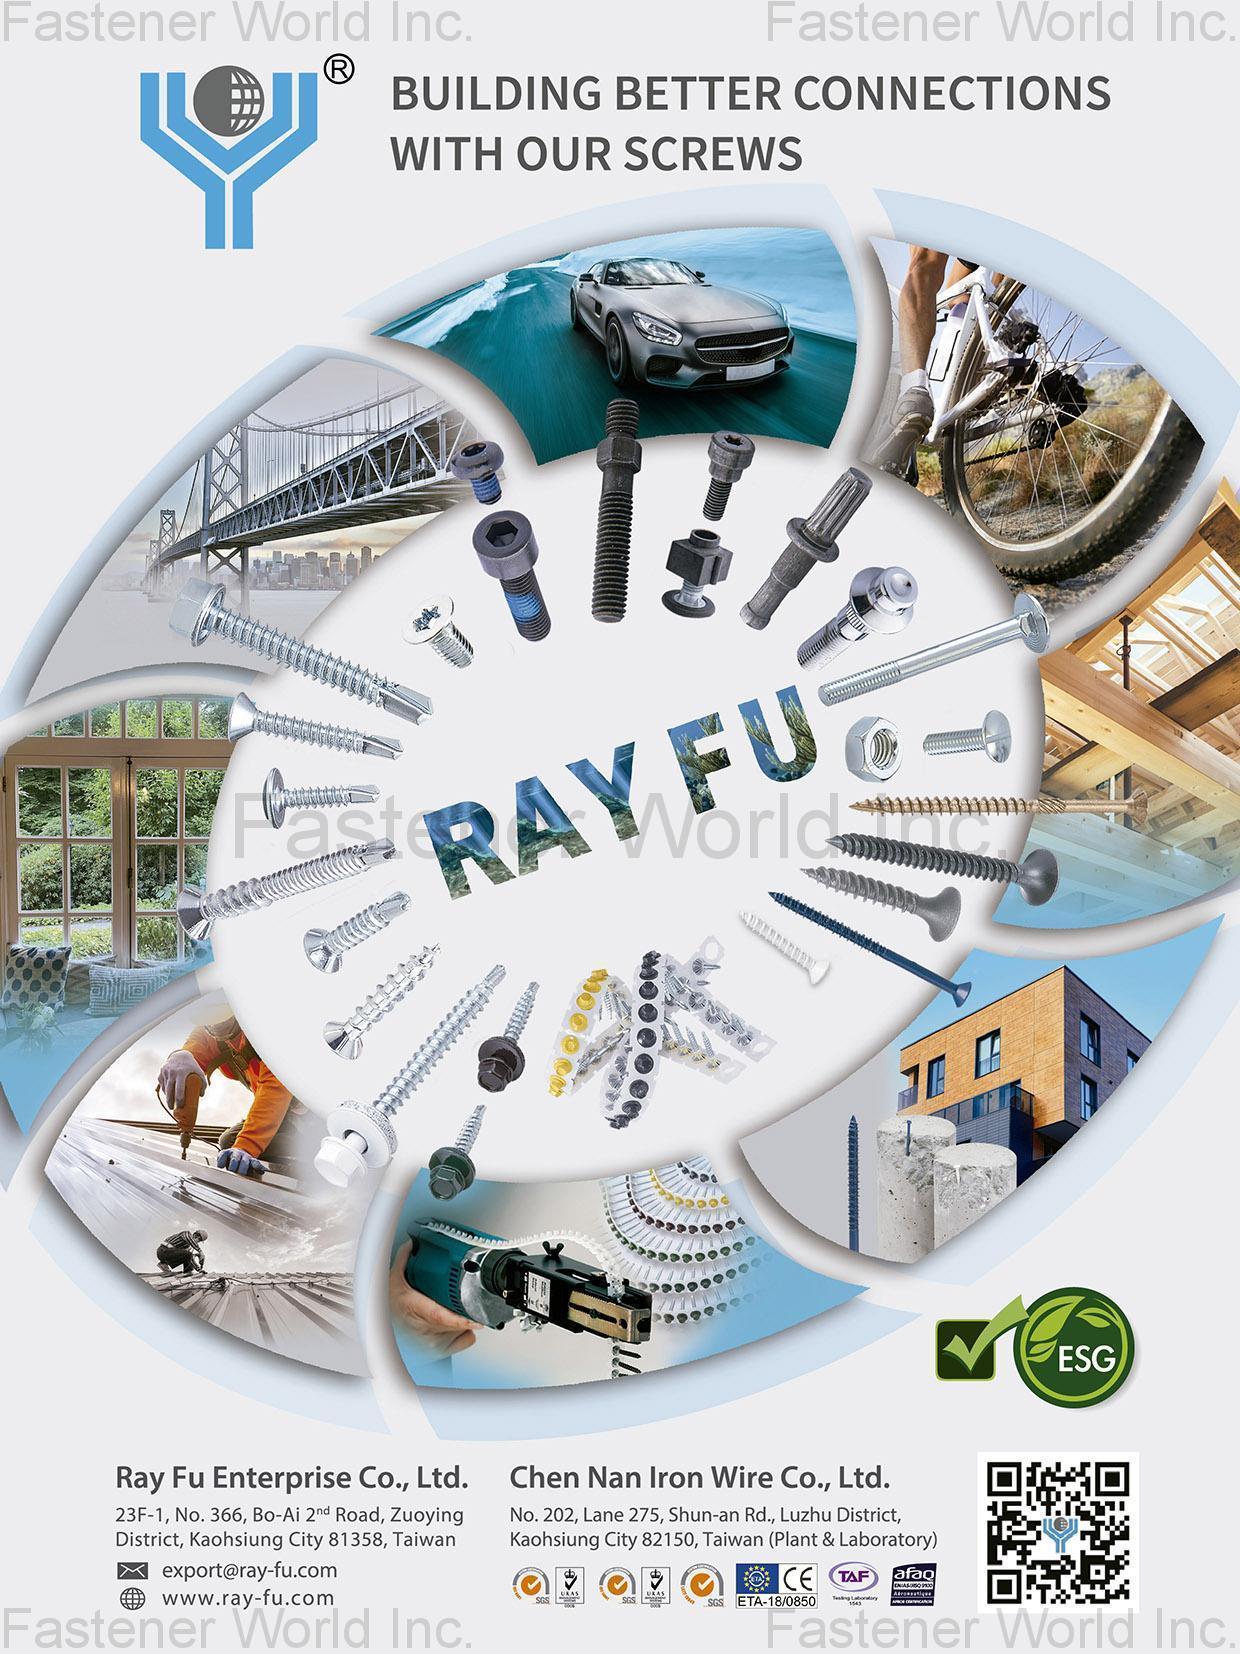 RAY FU ENTERPRISE CO., LTD. , Construction Screws, Automotive Parts, Special Fasteners